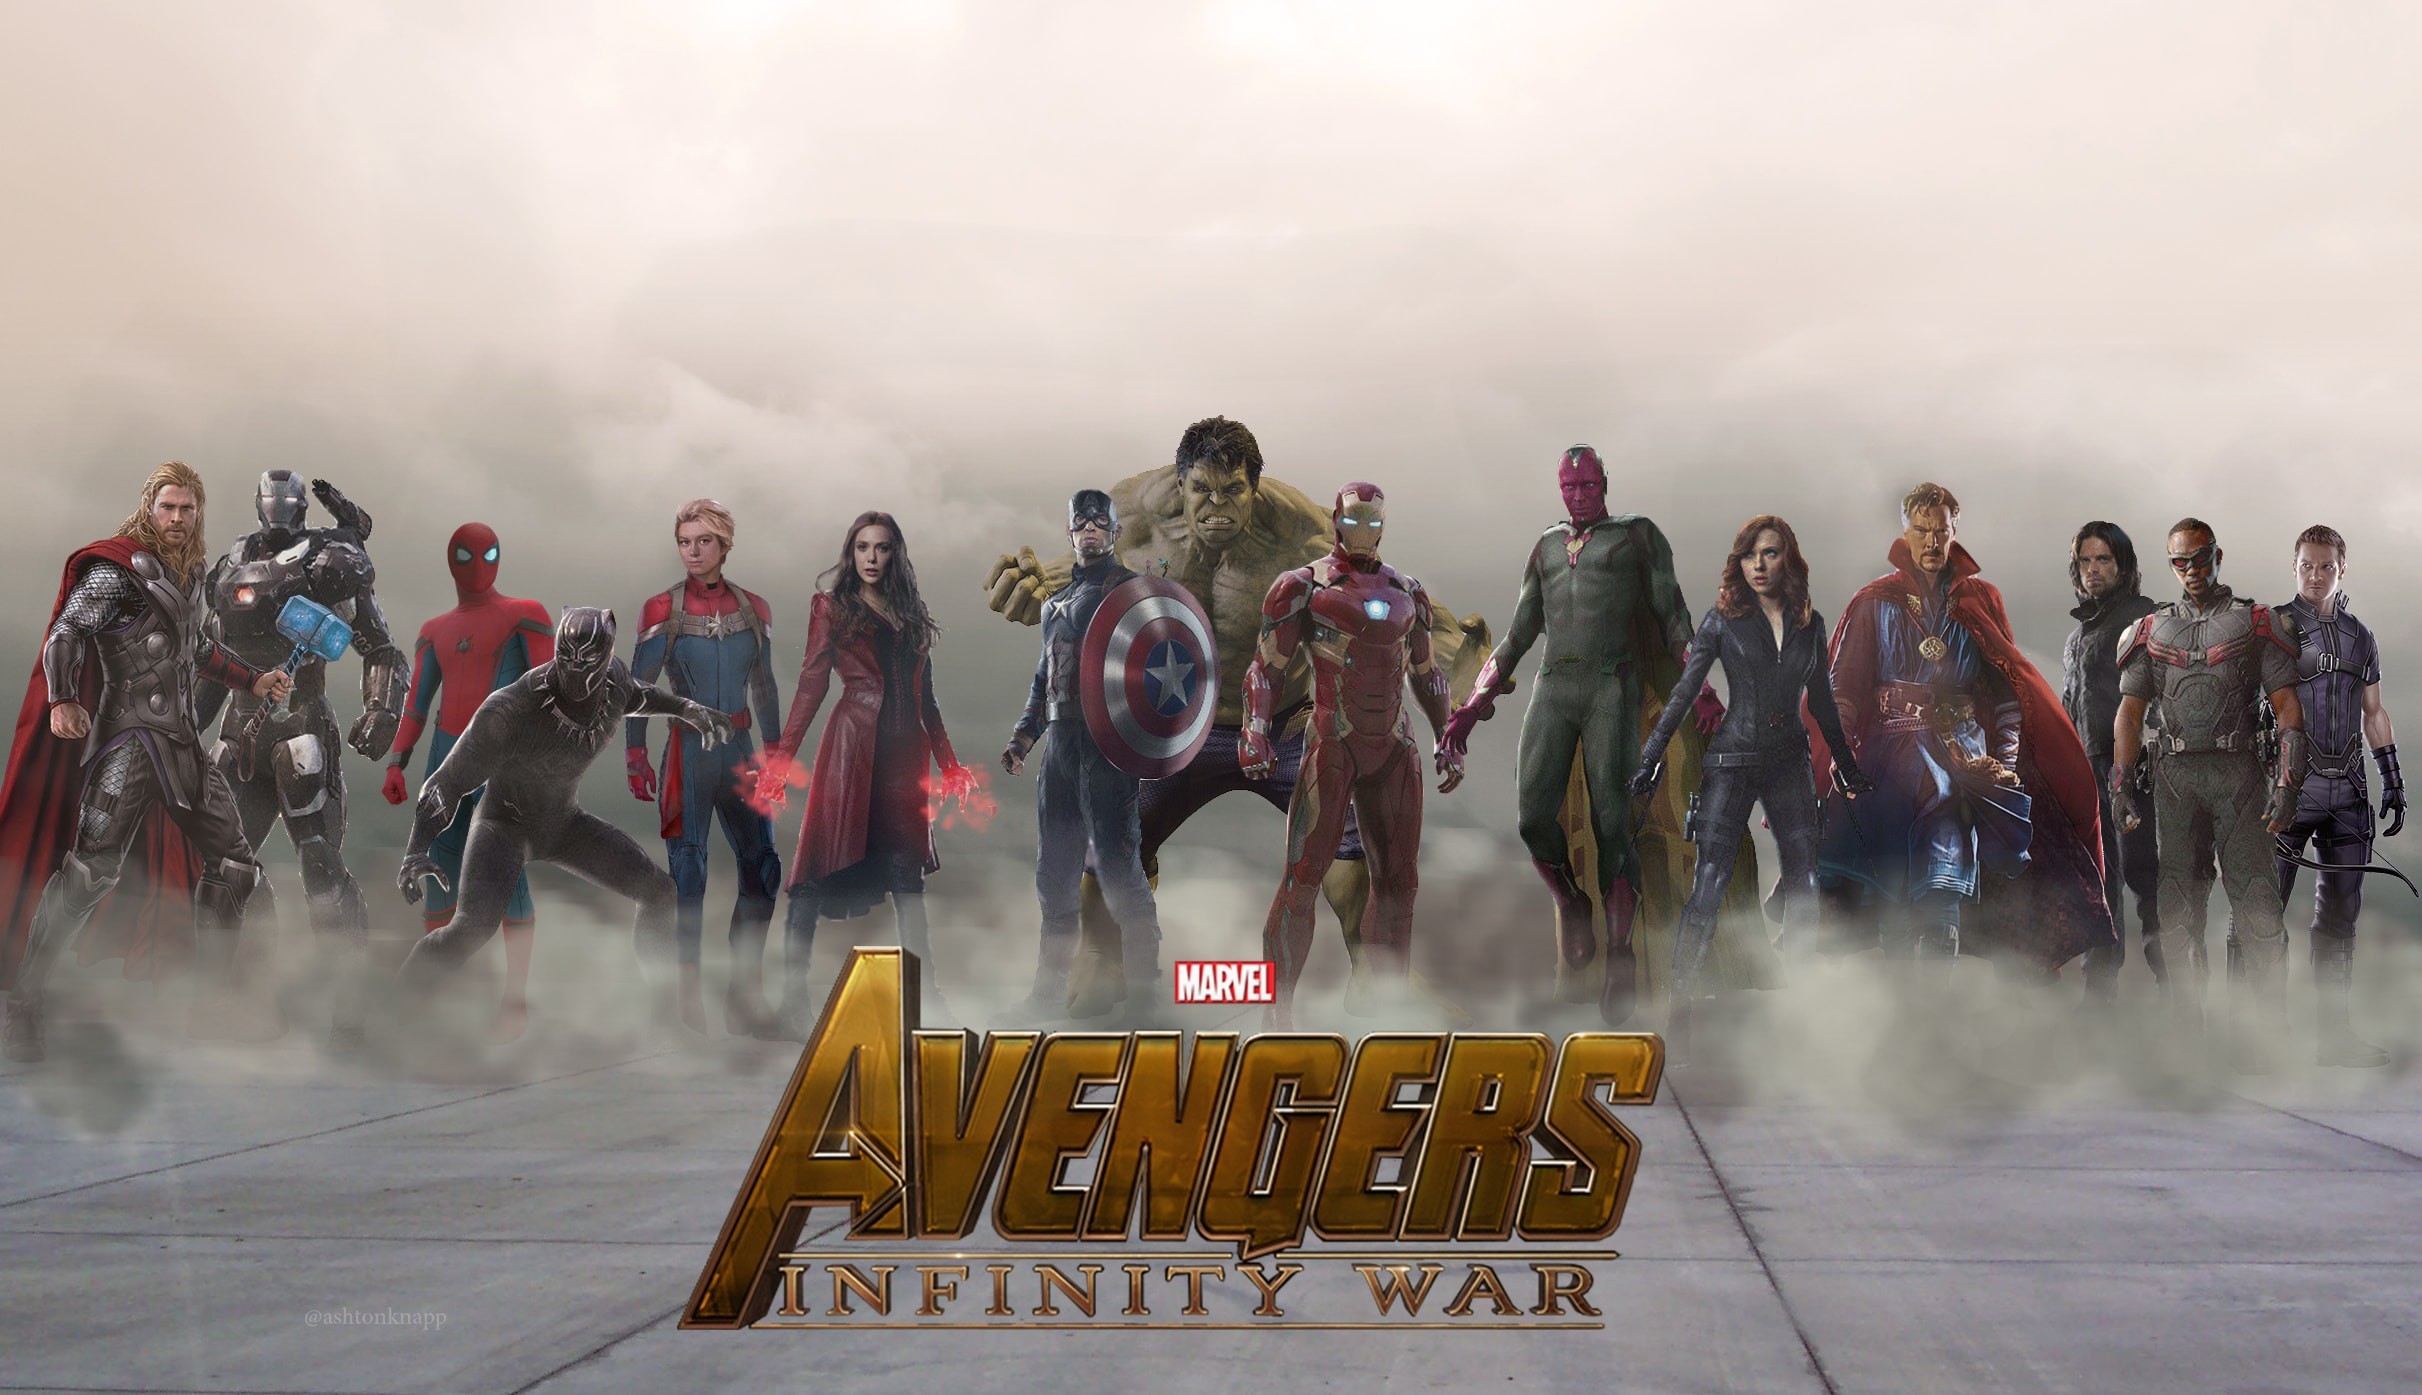 2422x1395 Avengers Infinty War 2018 Movie Fan Art - Image #2747 - Licence: Free for